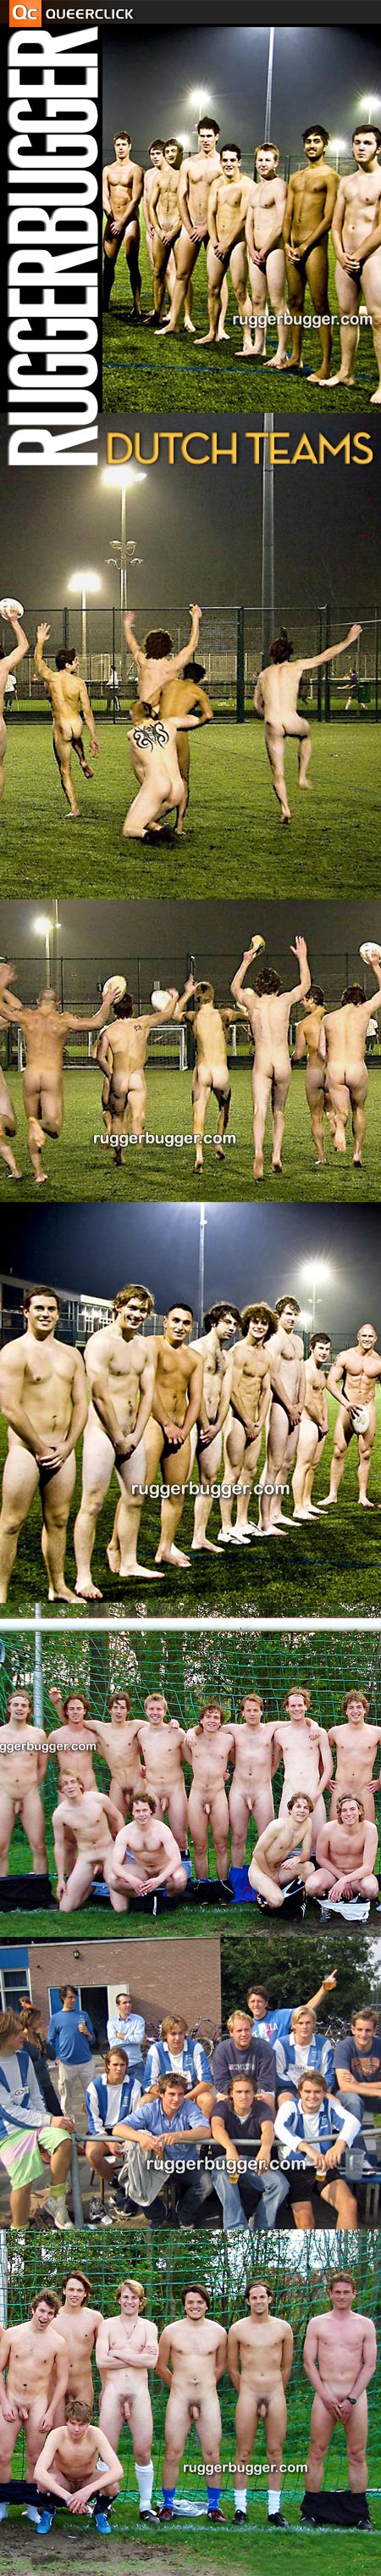 Dutch teams that love to go naked at Ruggerbugger